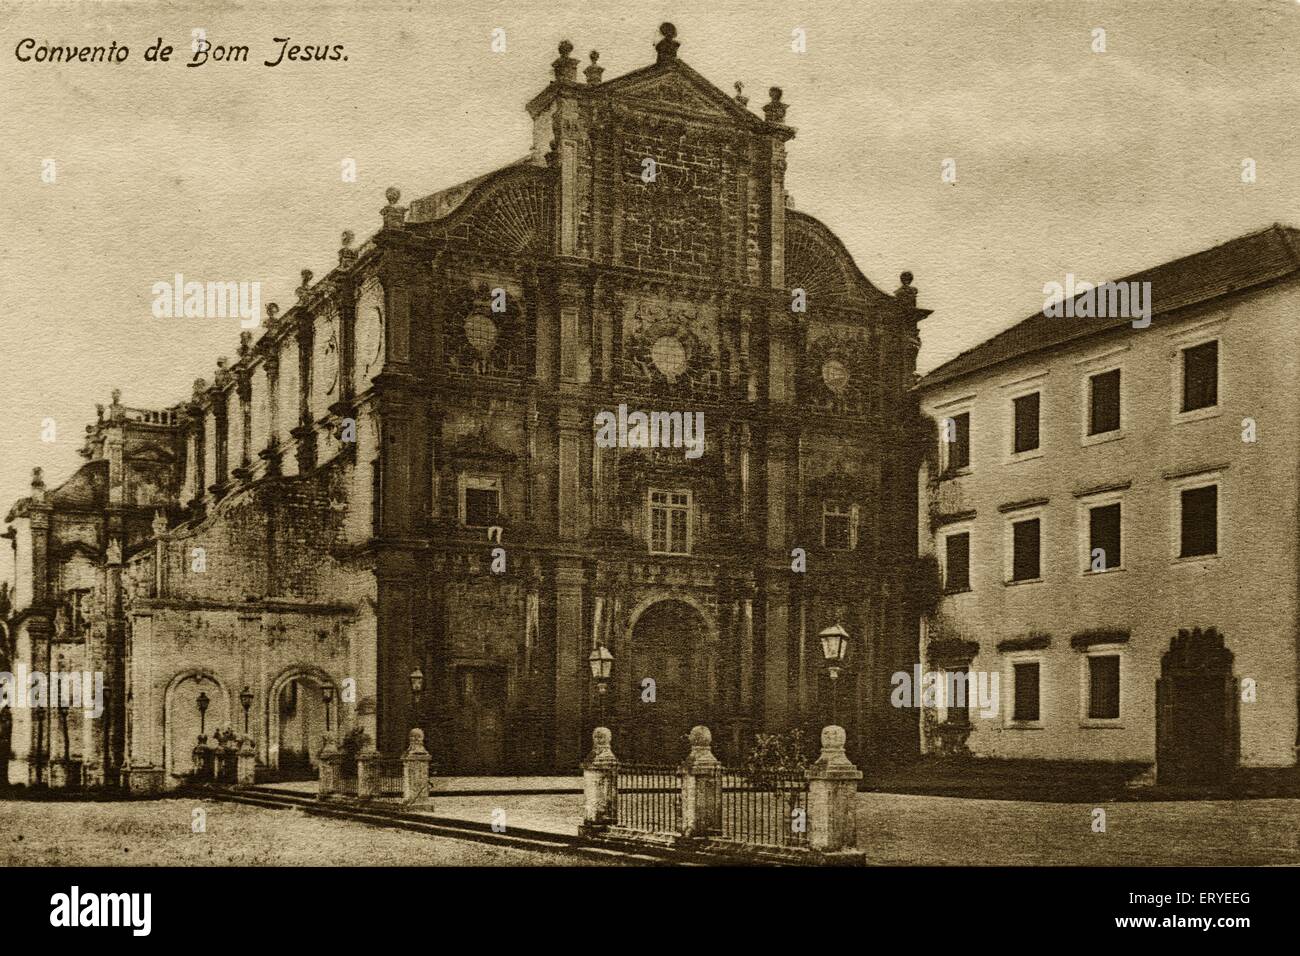 Ancienne image vintage 1900 ; Convento de BOM Jesus ; Old Goa ; Inde Banque D'Images